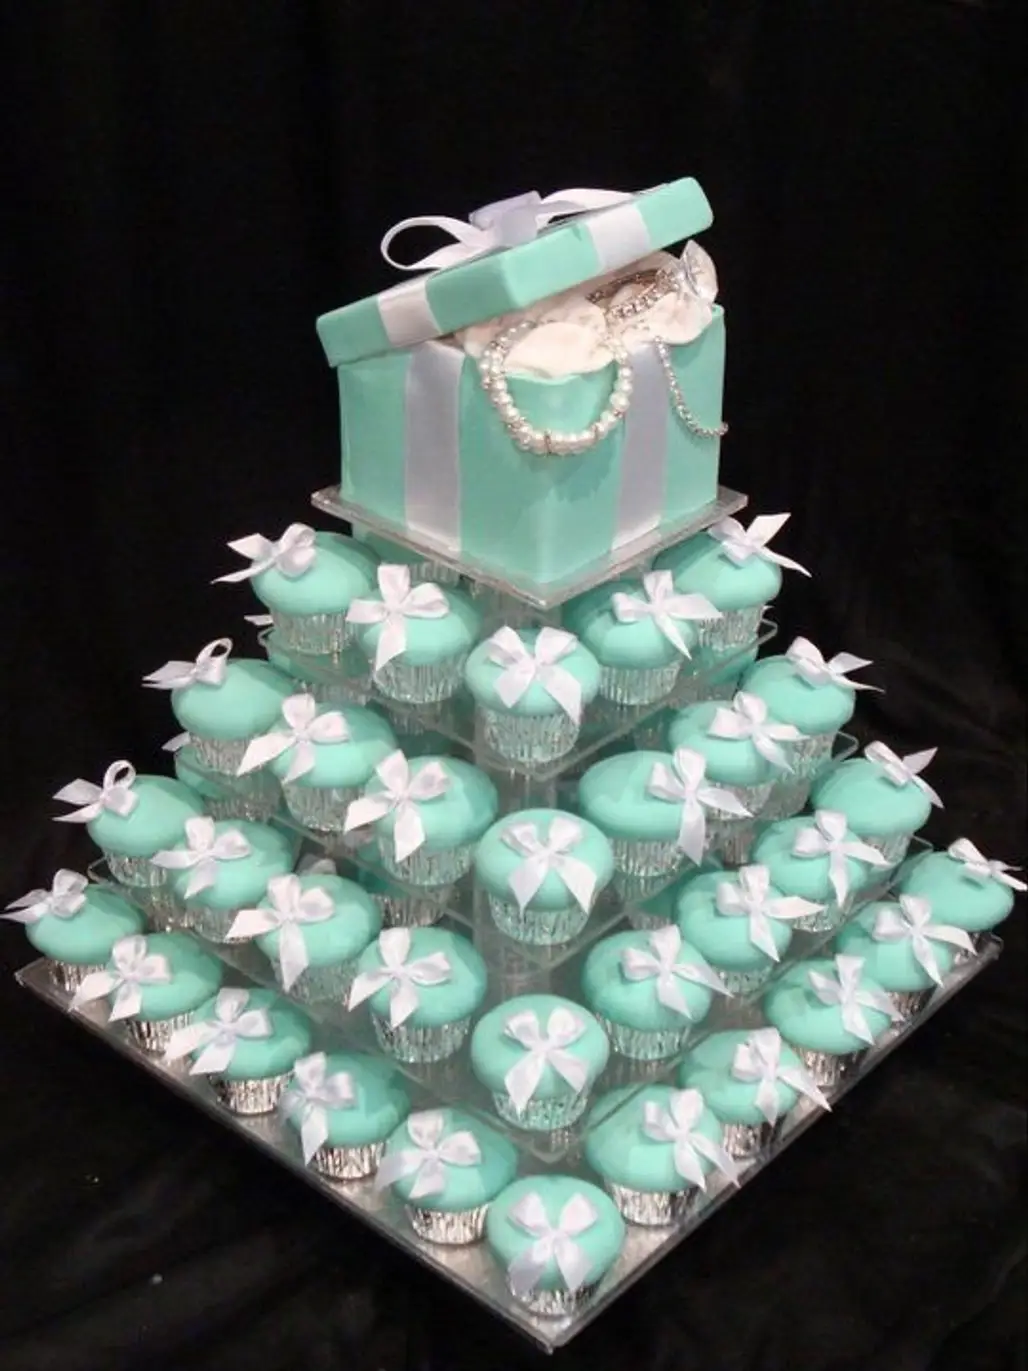 Tiffany's Wedding Cake and Cupcakes